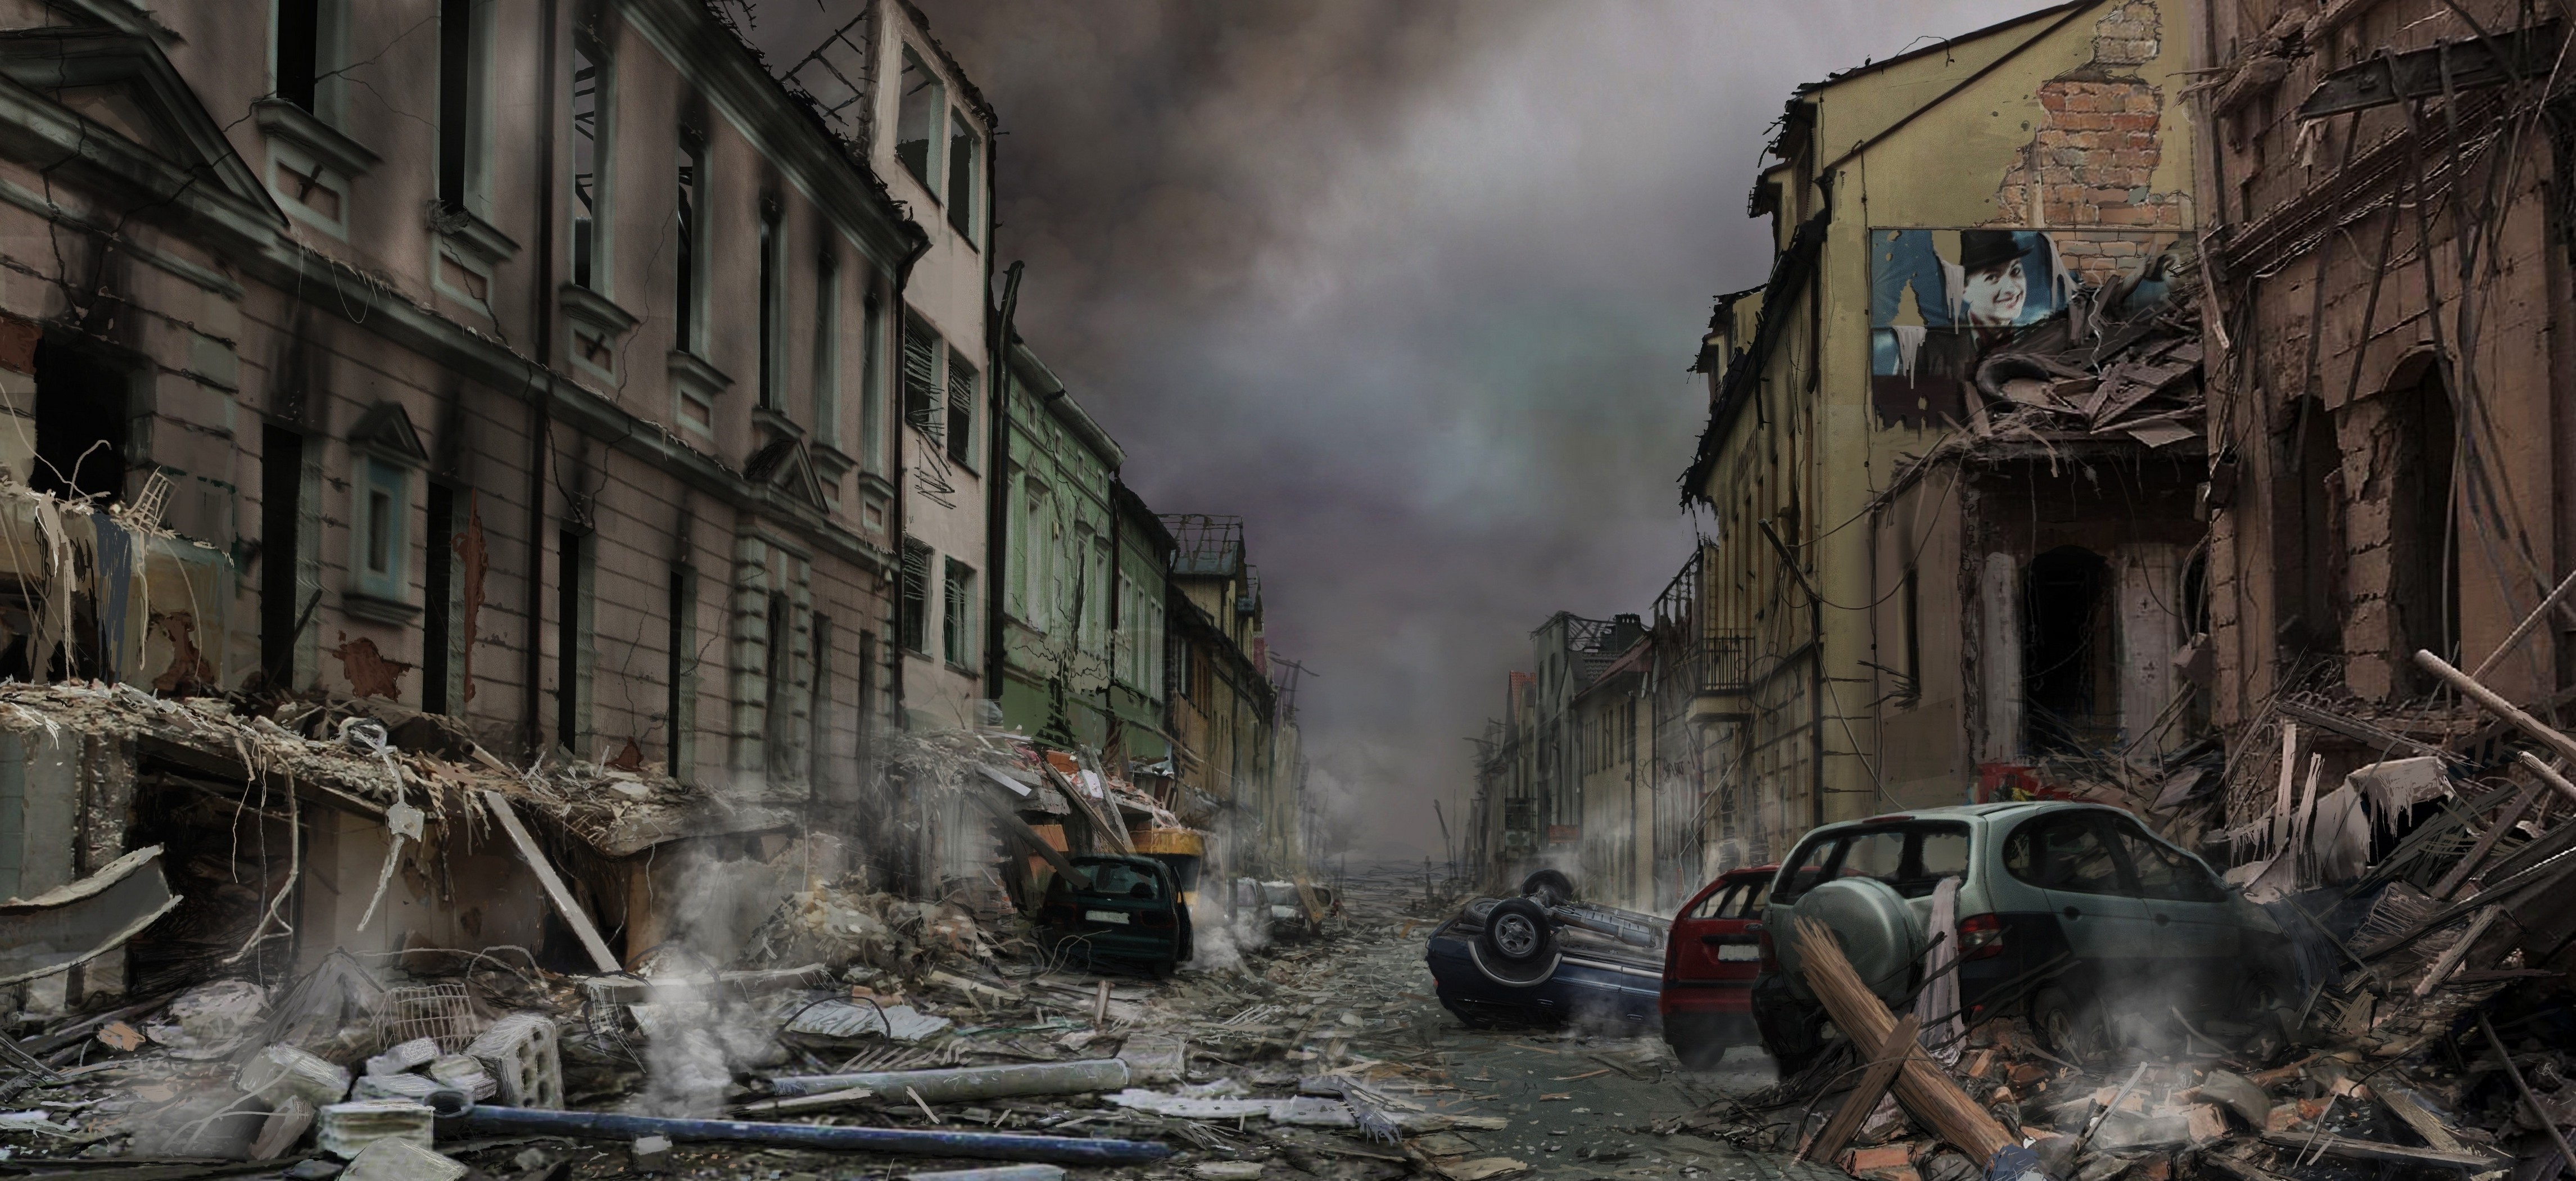 General 4583x2101 apocalyptic artwork ruins cityscape digital art street